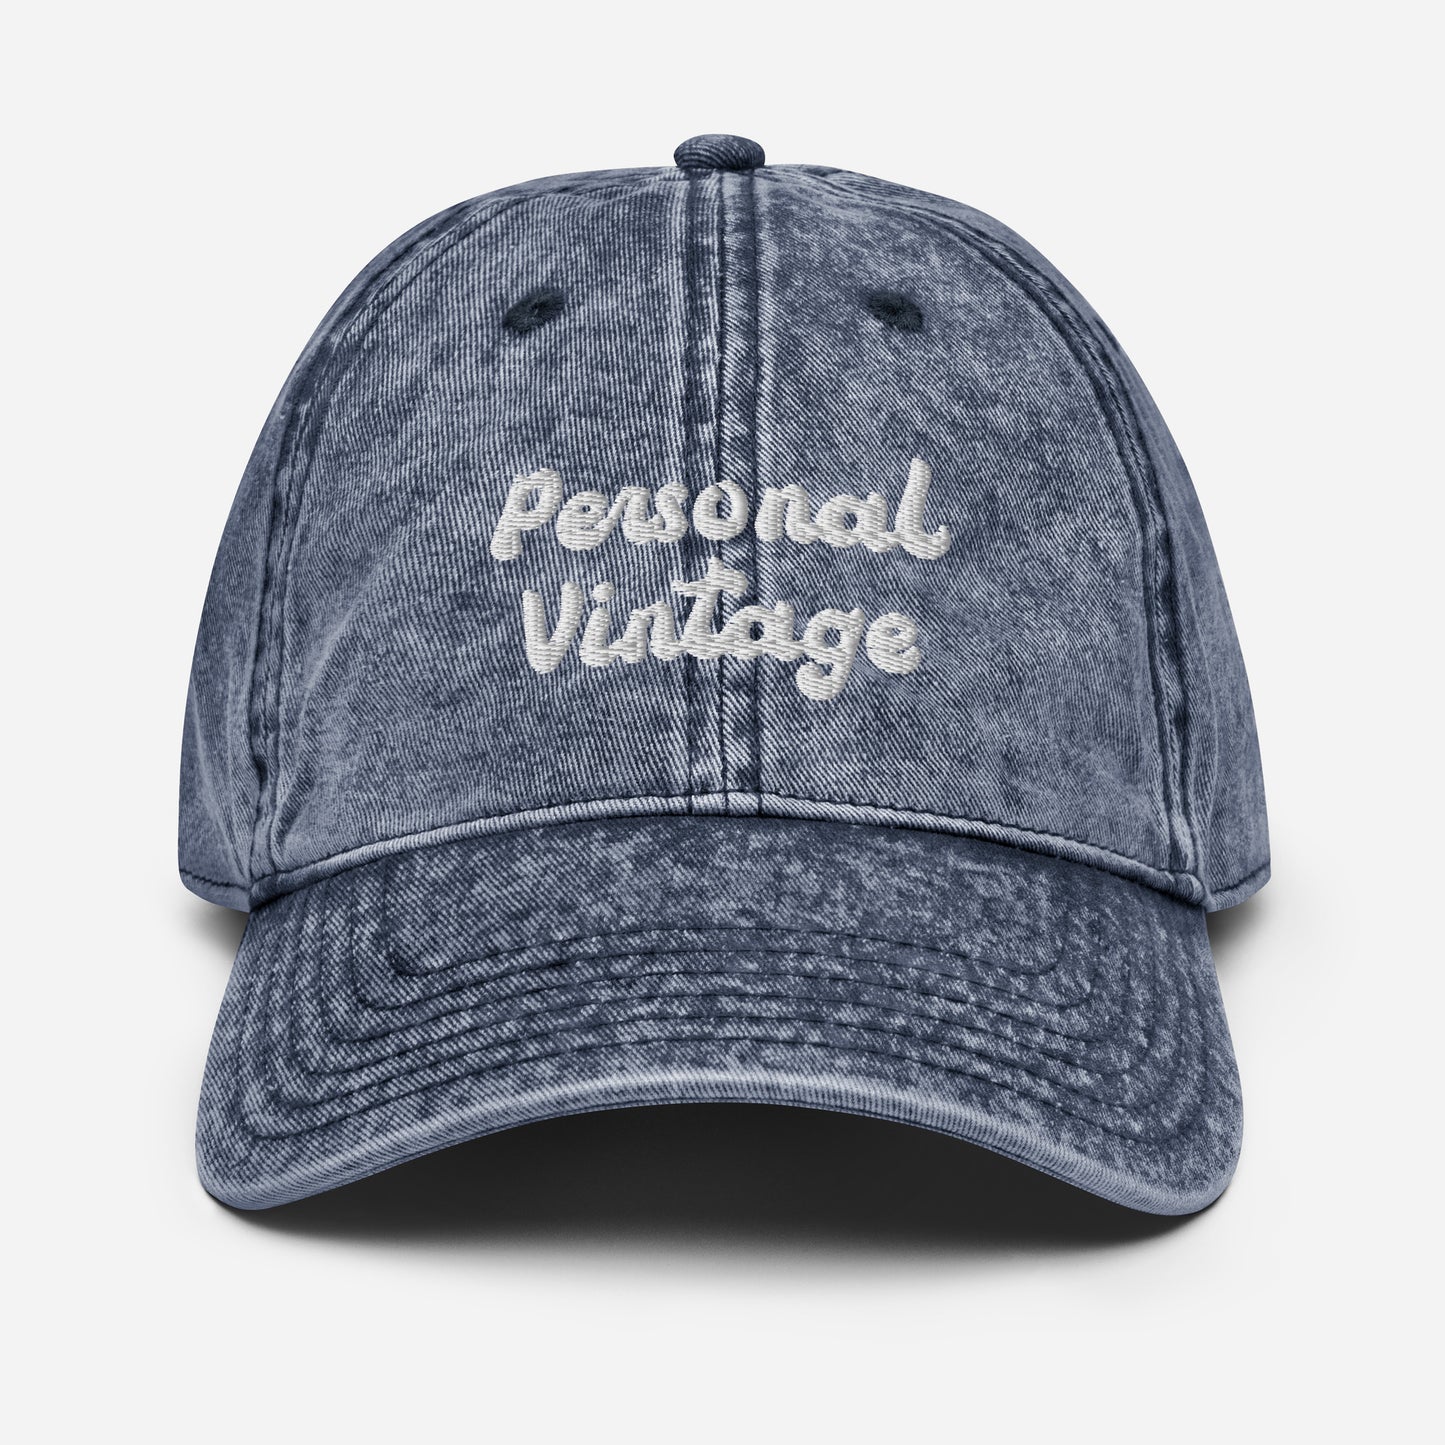 Personal Vintage Cotton Twill Cap